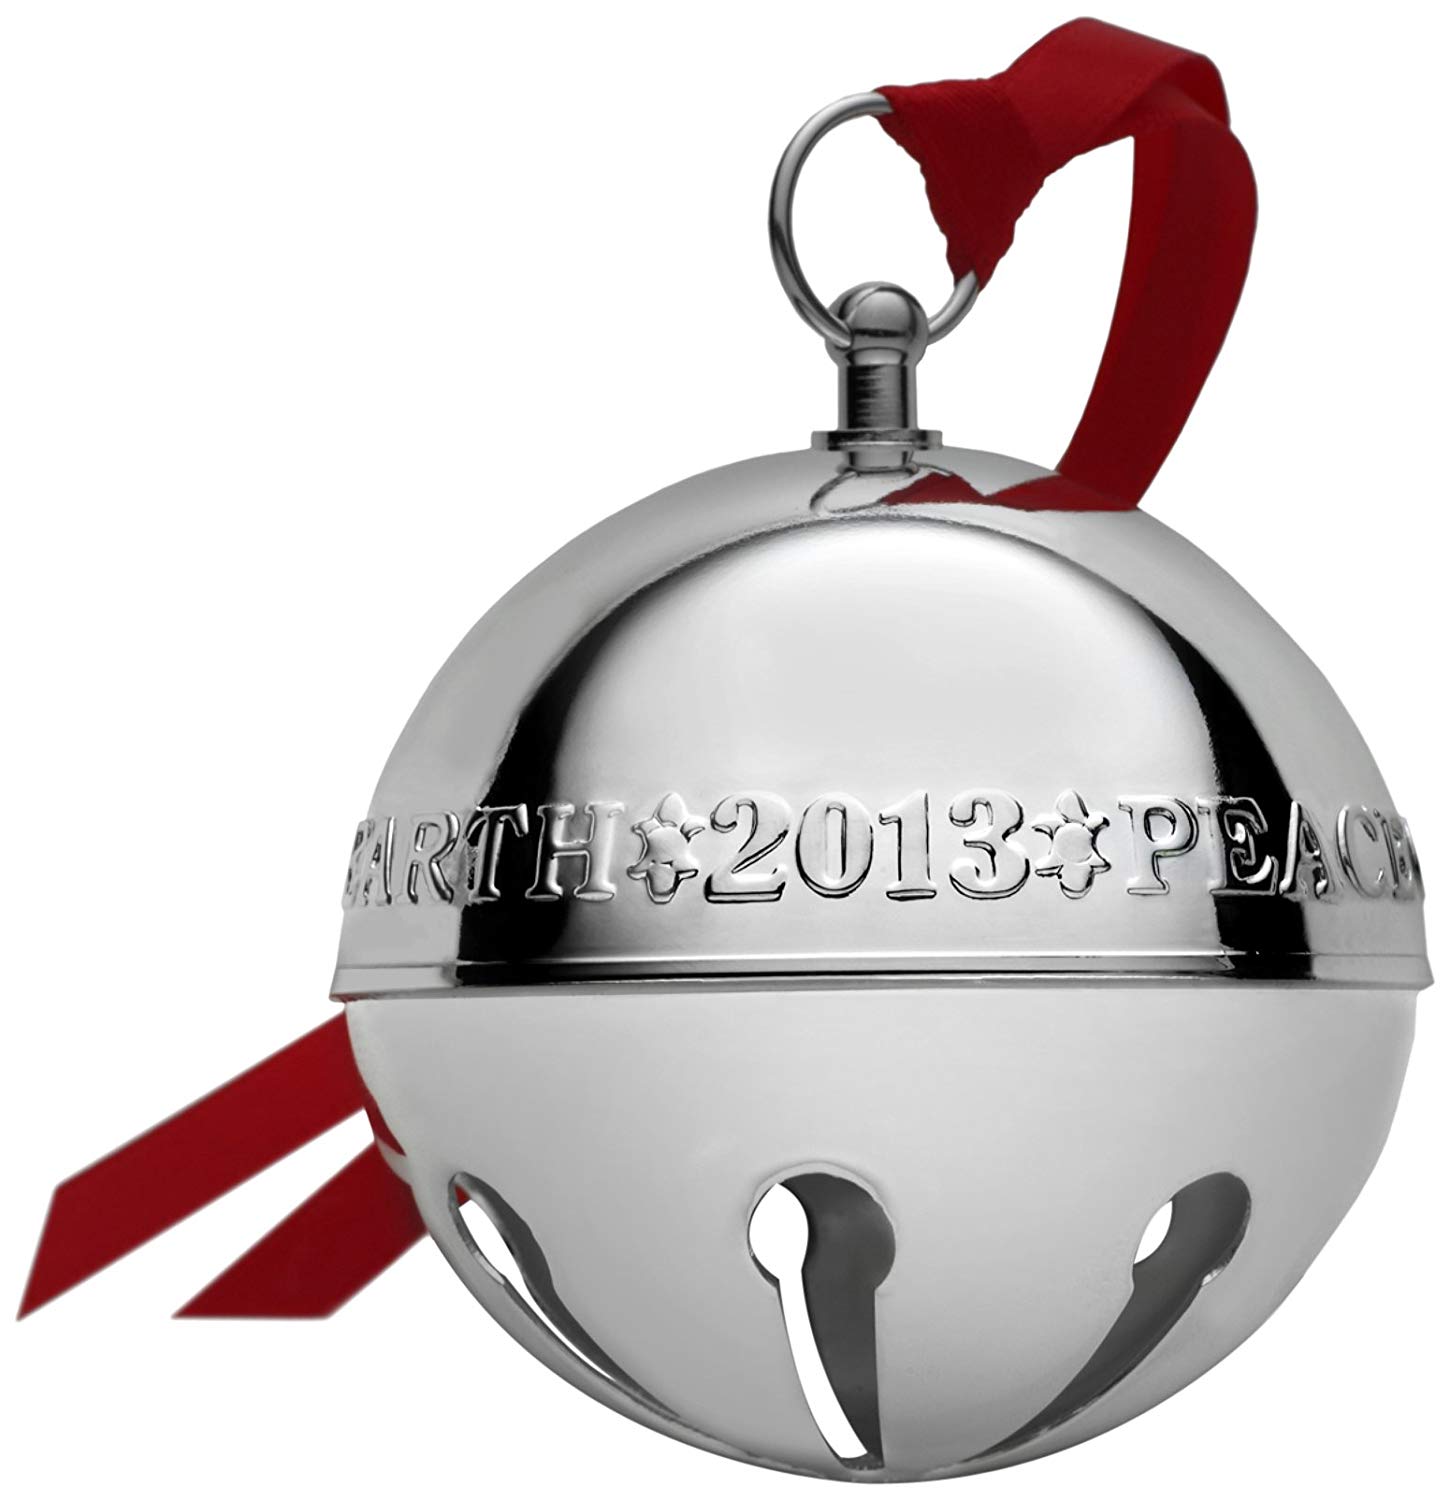 wallace-sleigh-bell-2013-43th-edition-silverplate.jpg